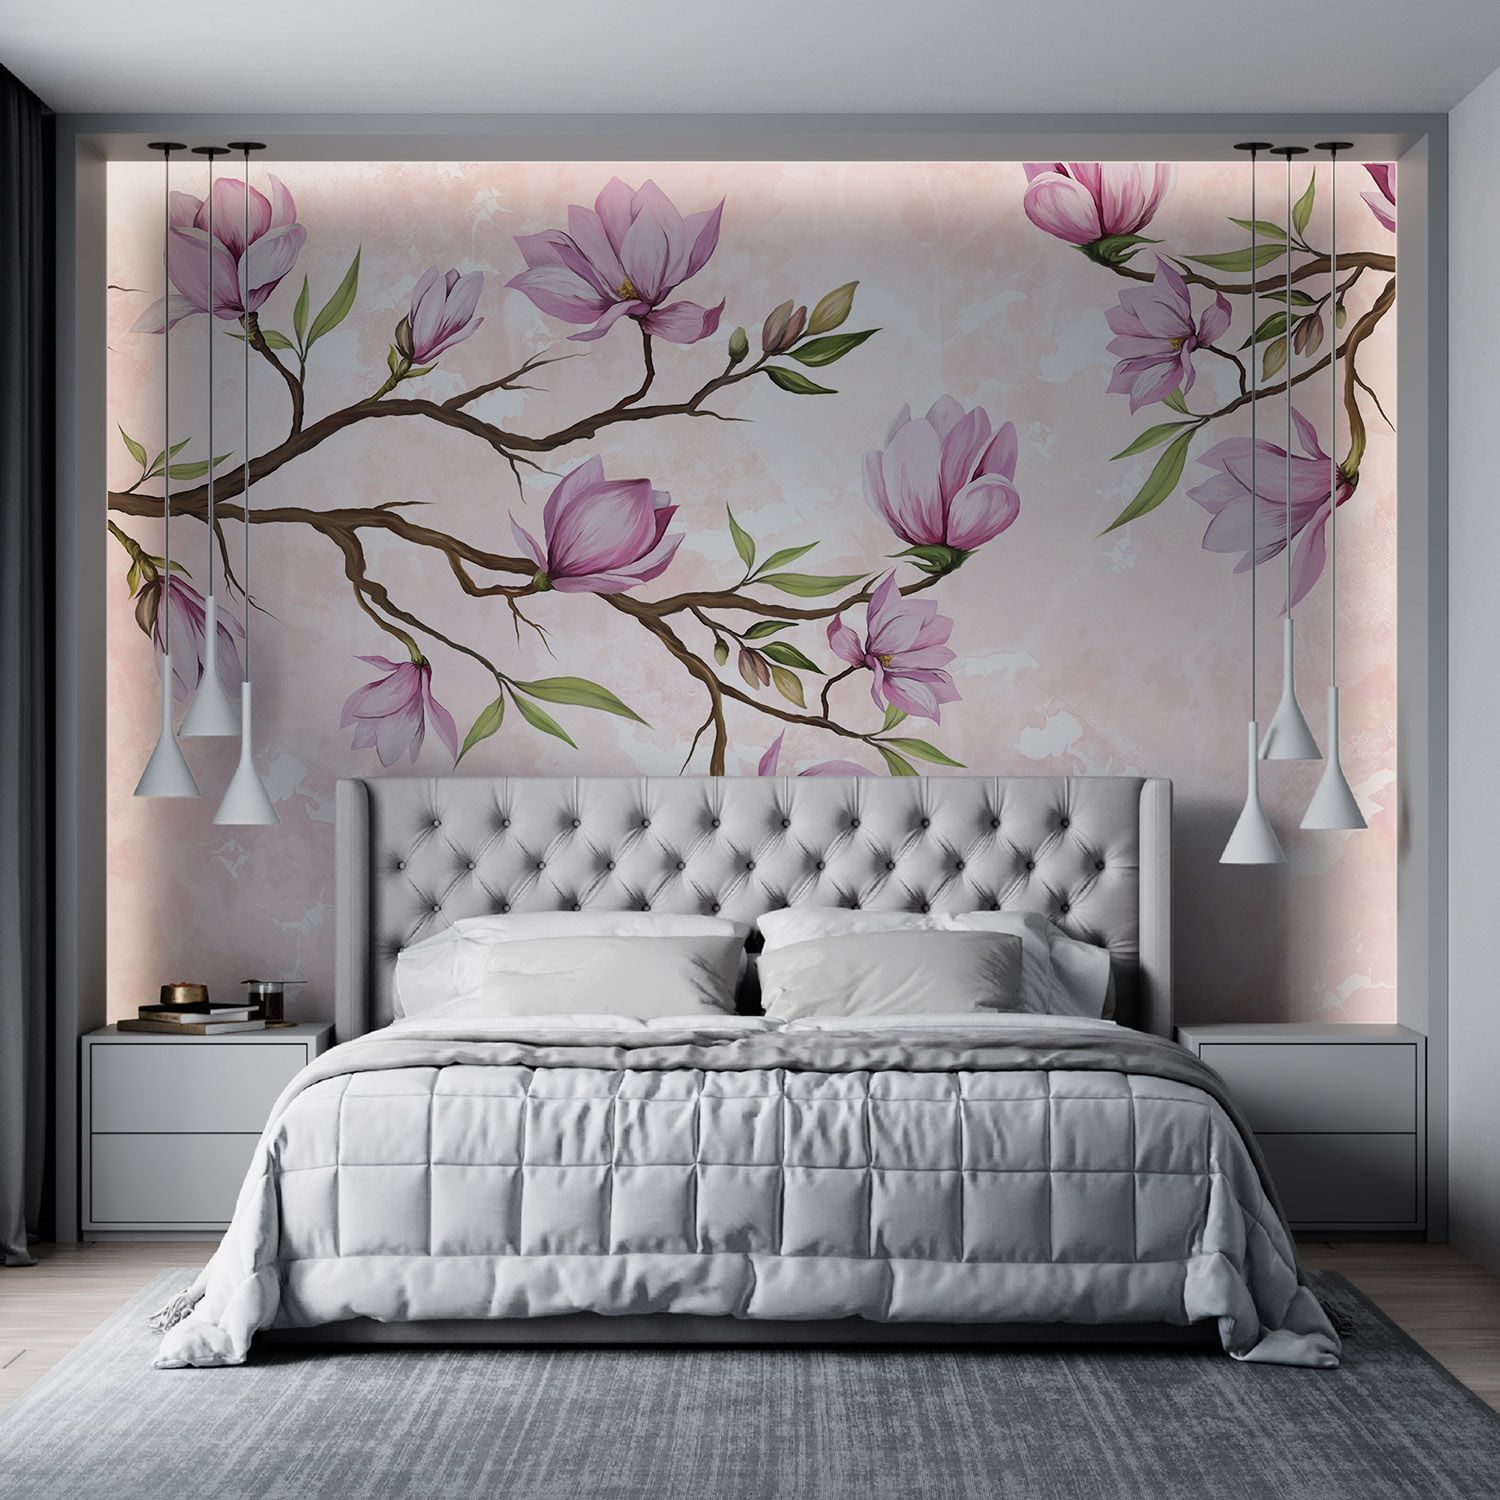 Fototapeta kwiaty magnolii